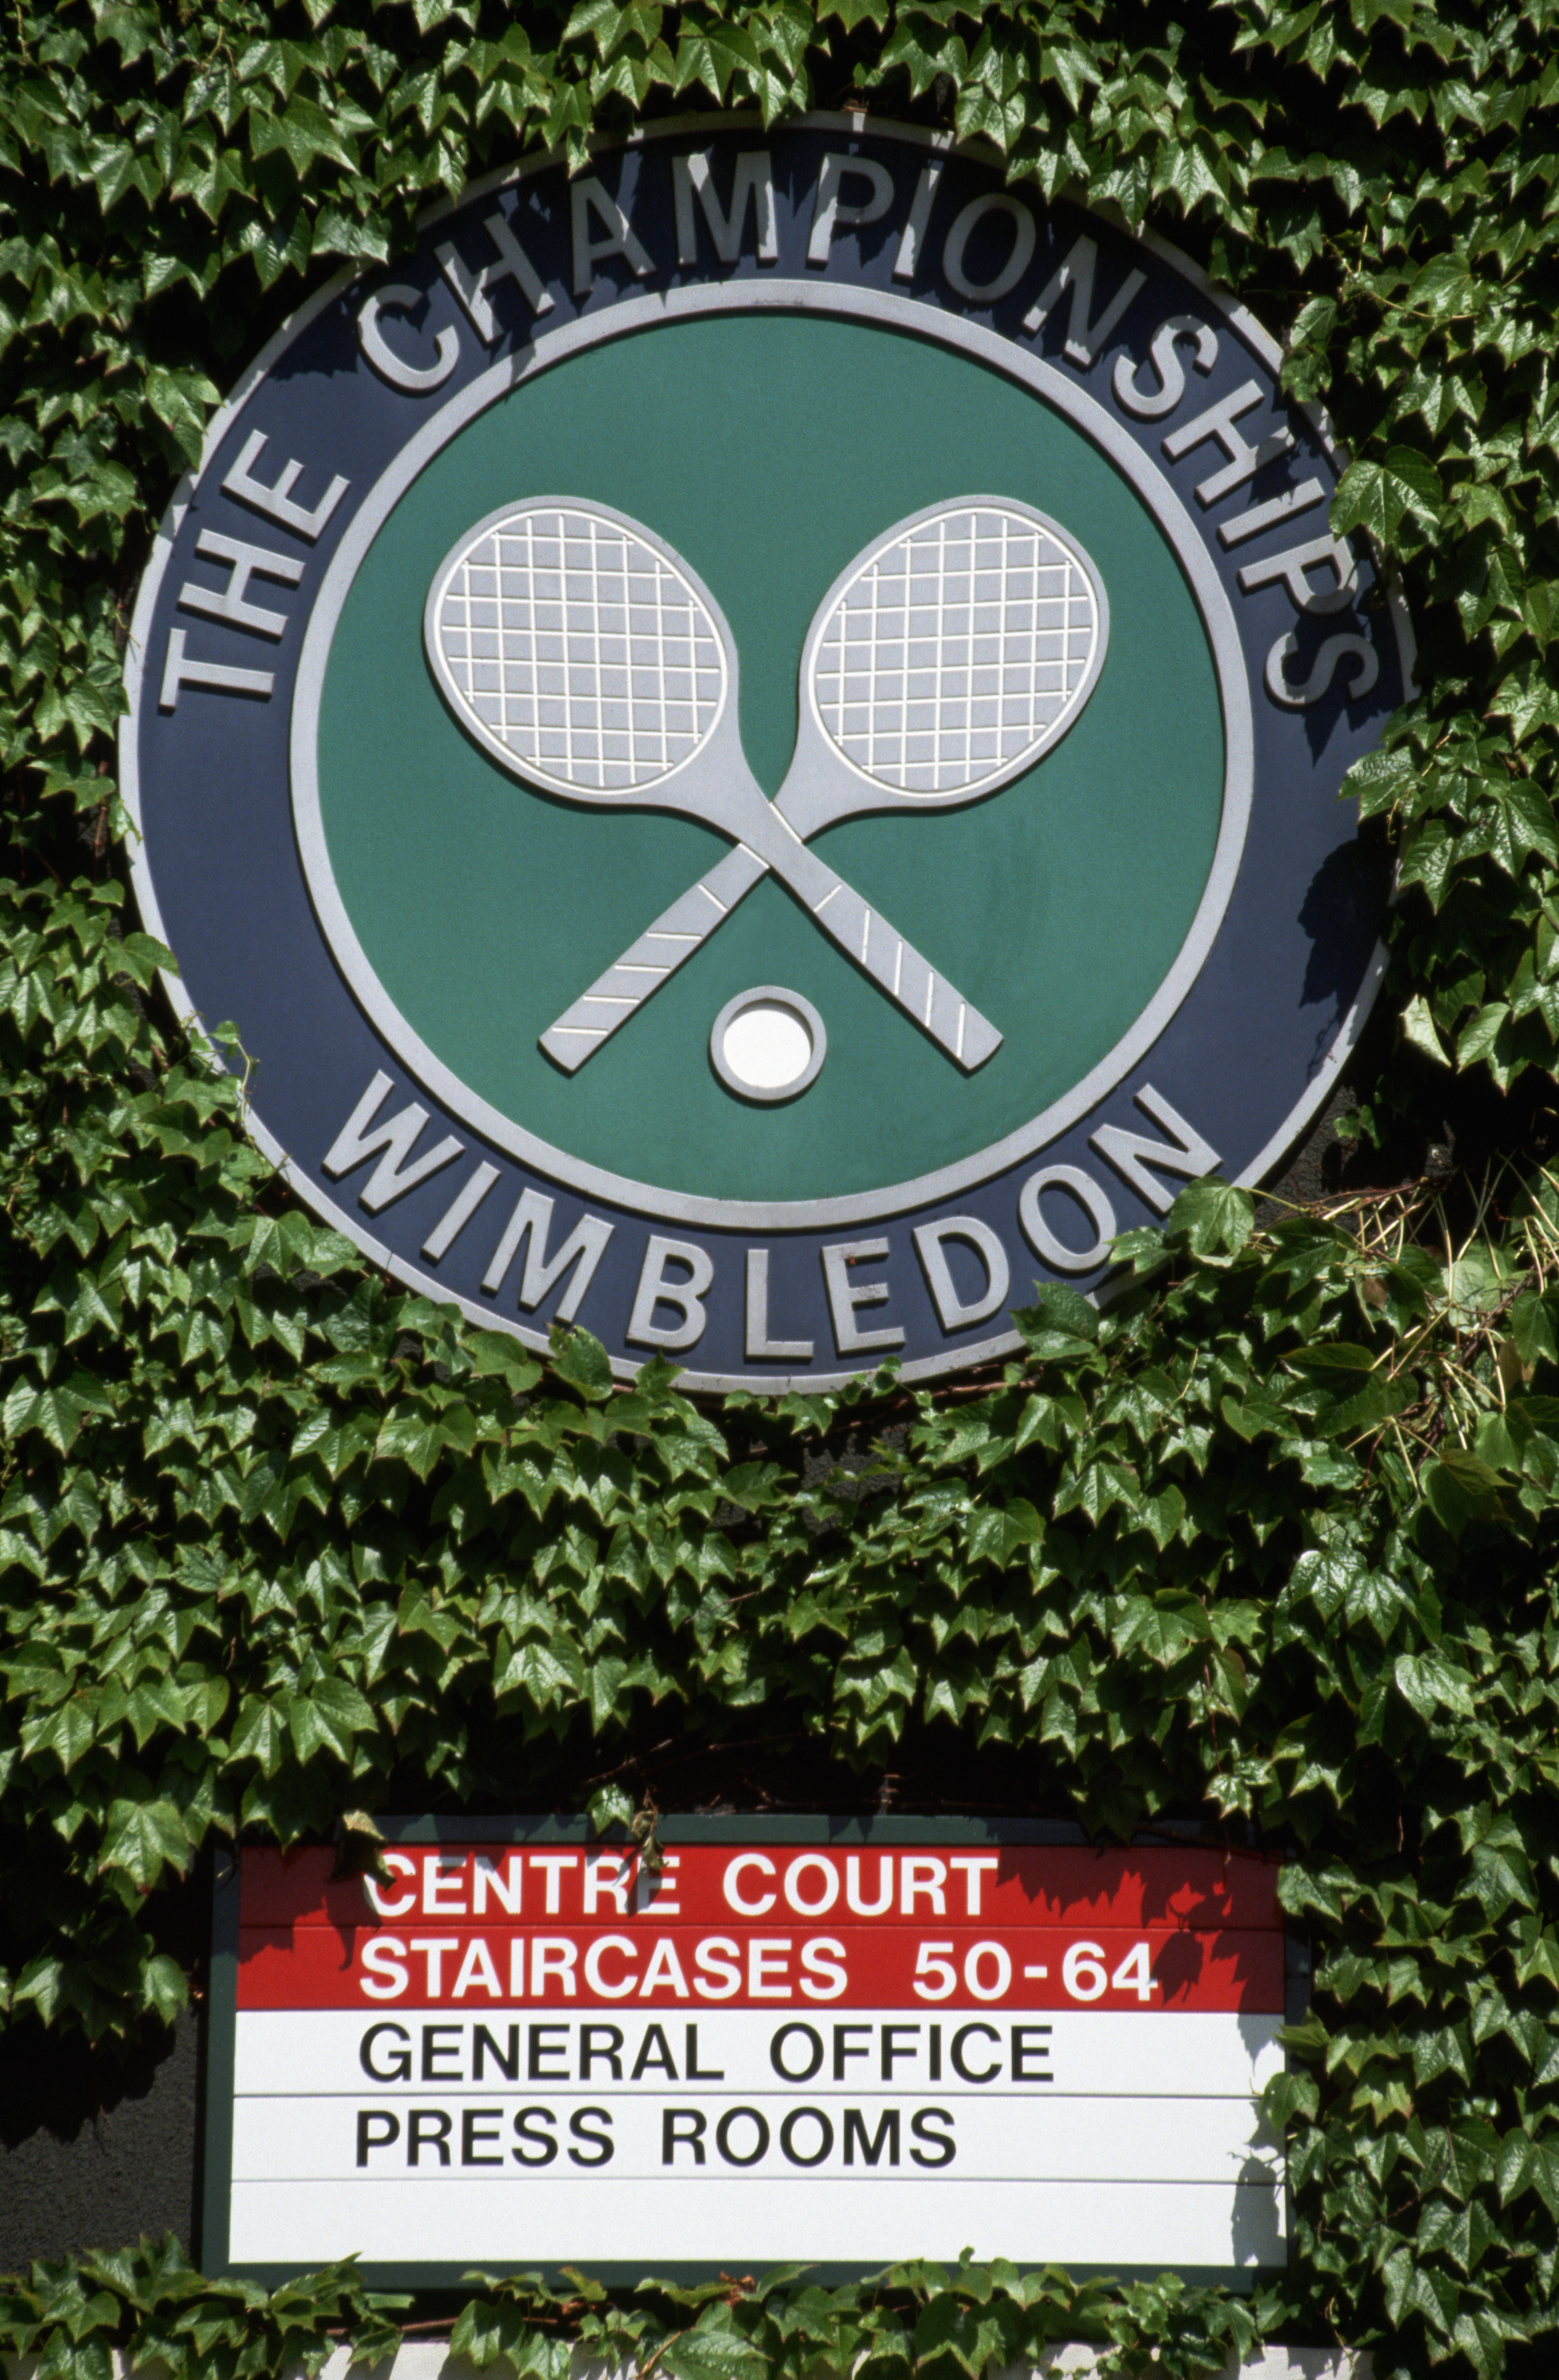 The Wimbledon Tennis Club emblem at center court during the 1994 tournament